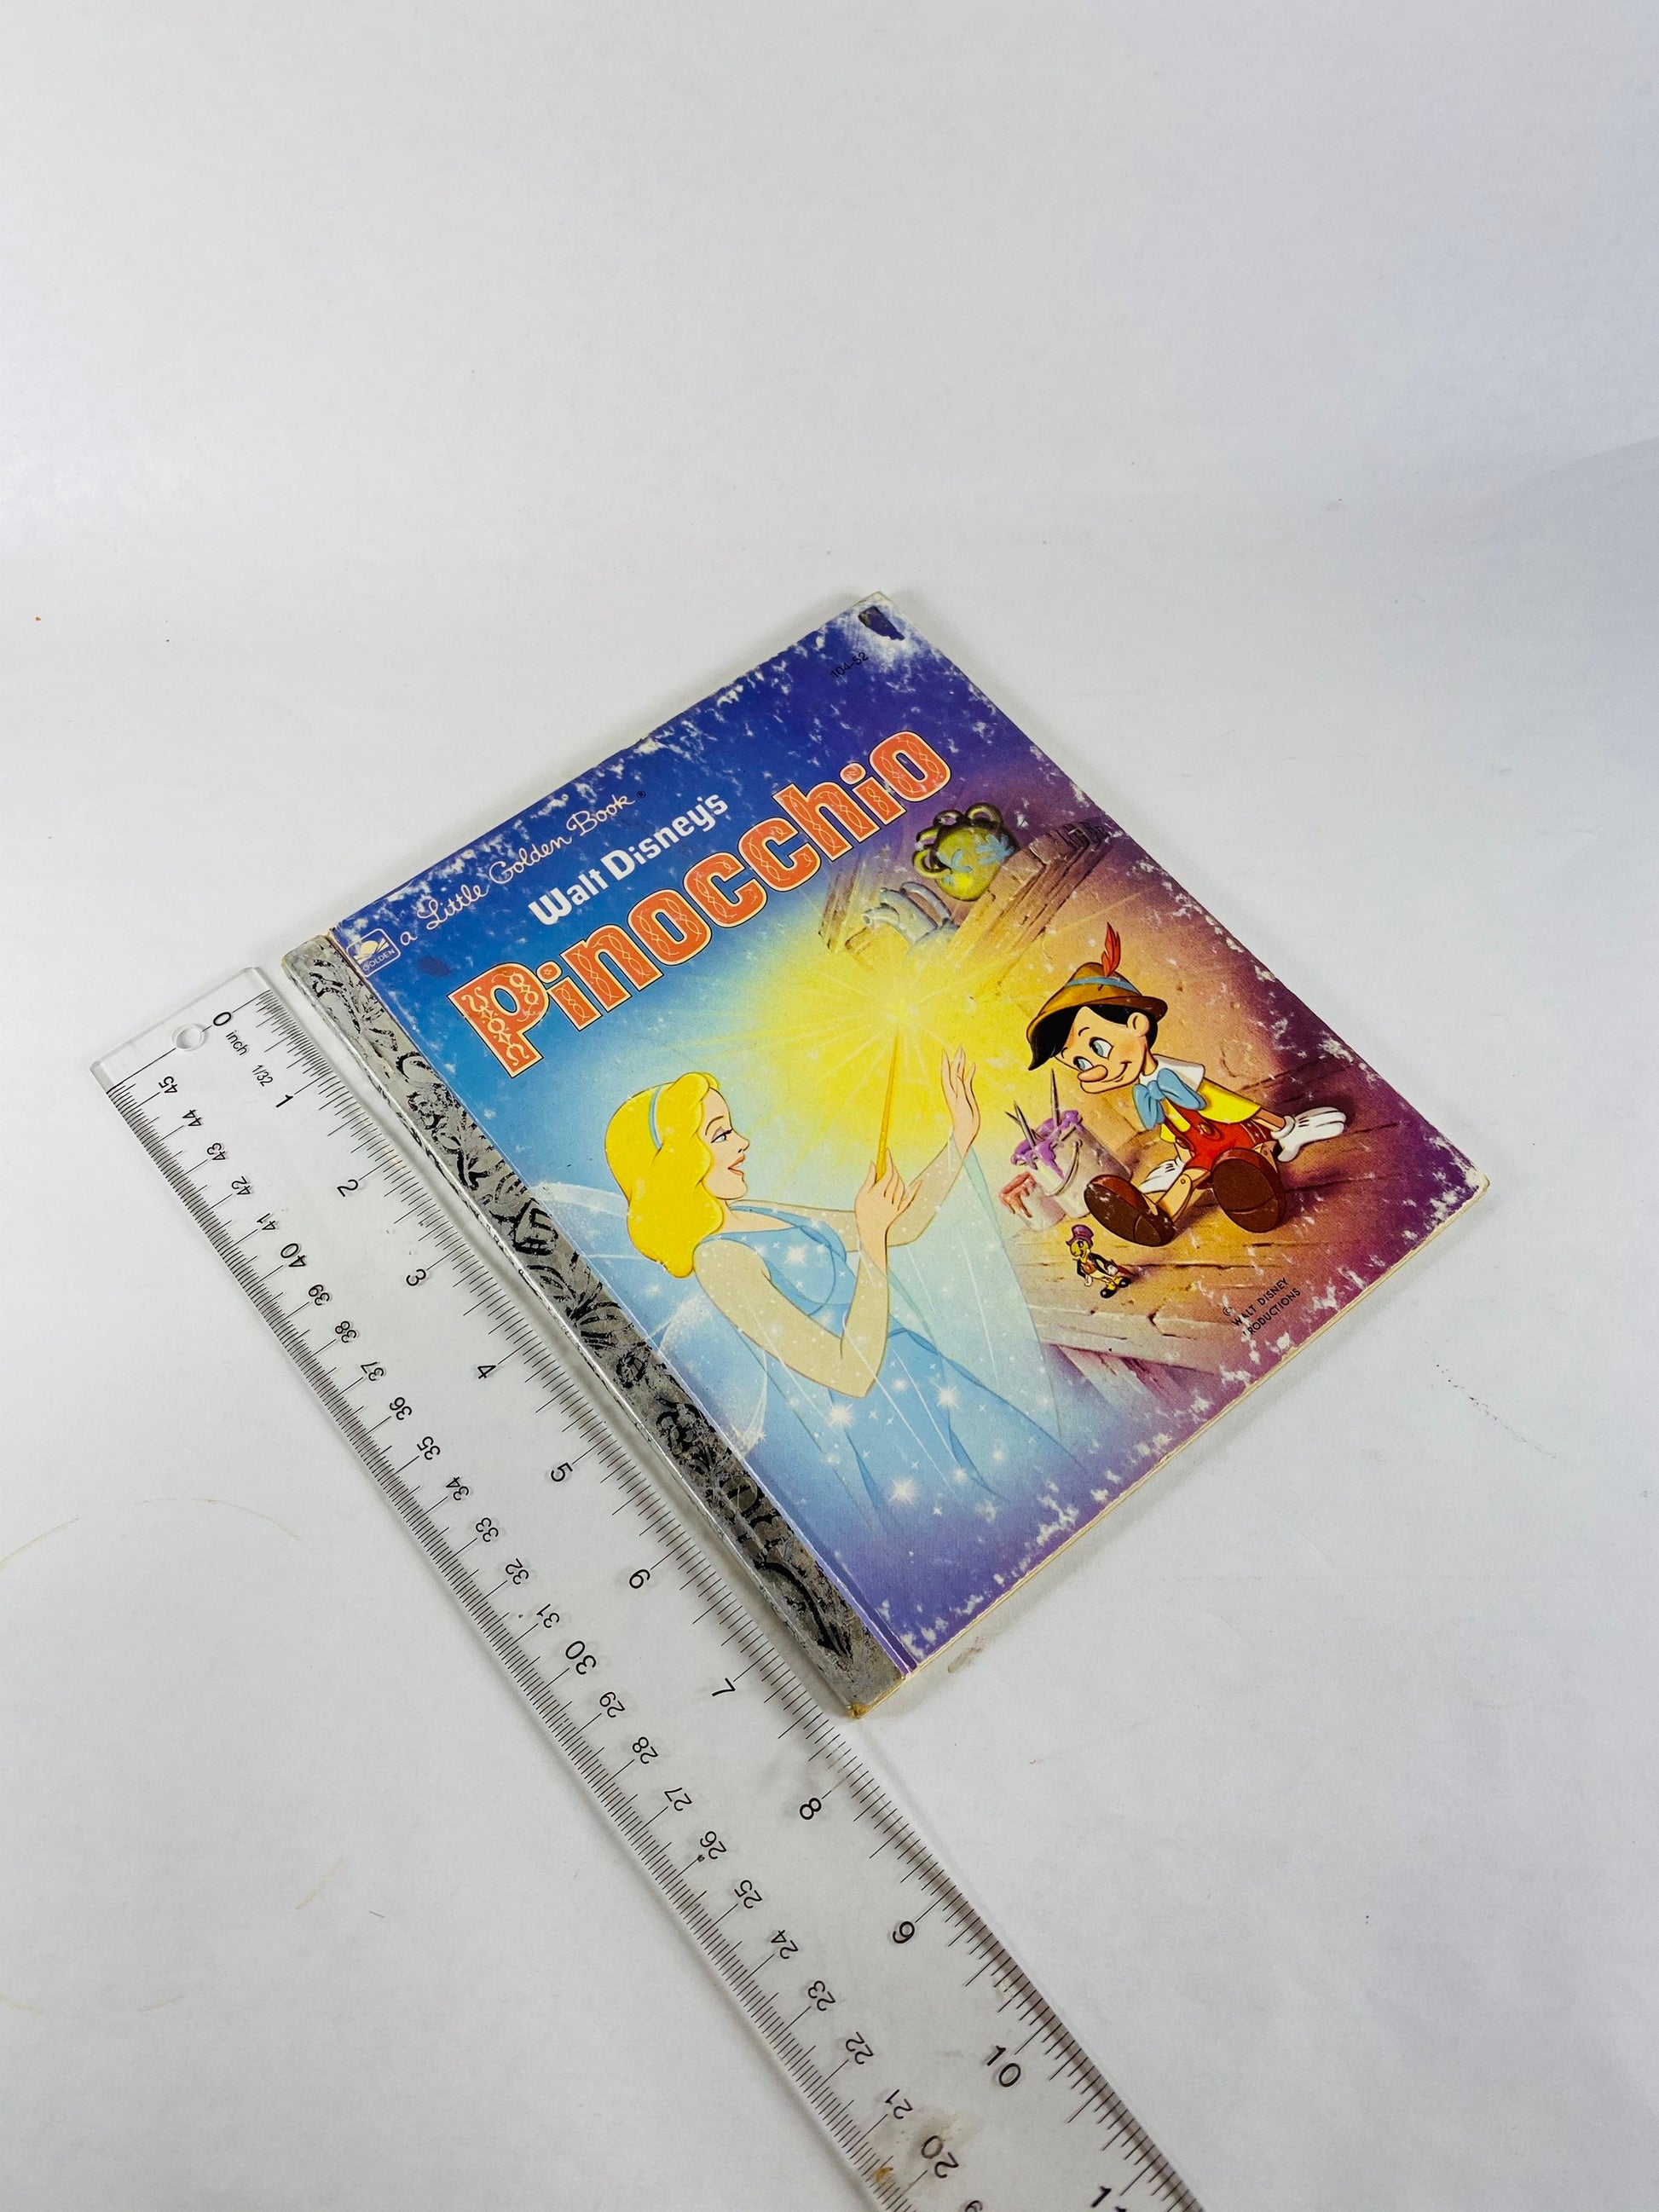 1980 Pinocchio Little Golden Book Walt Disney illustrations children’s stocking stuffer at home reading. Bedtime stories